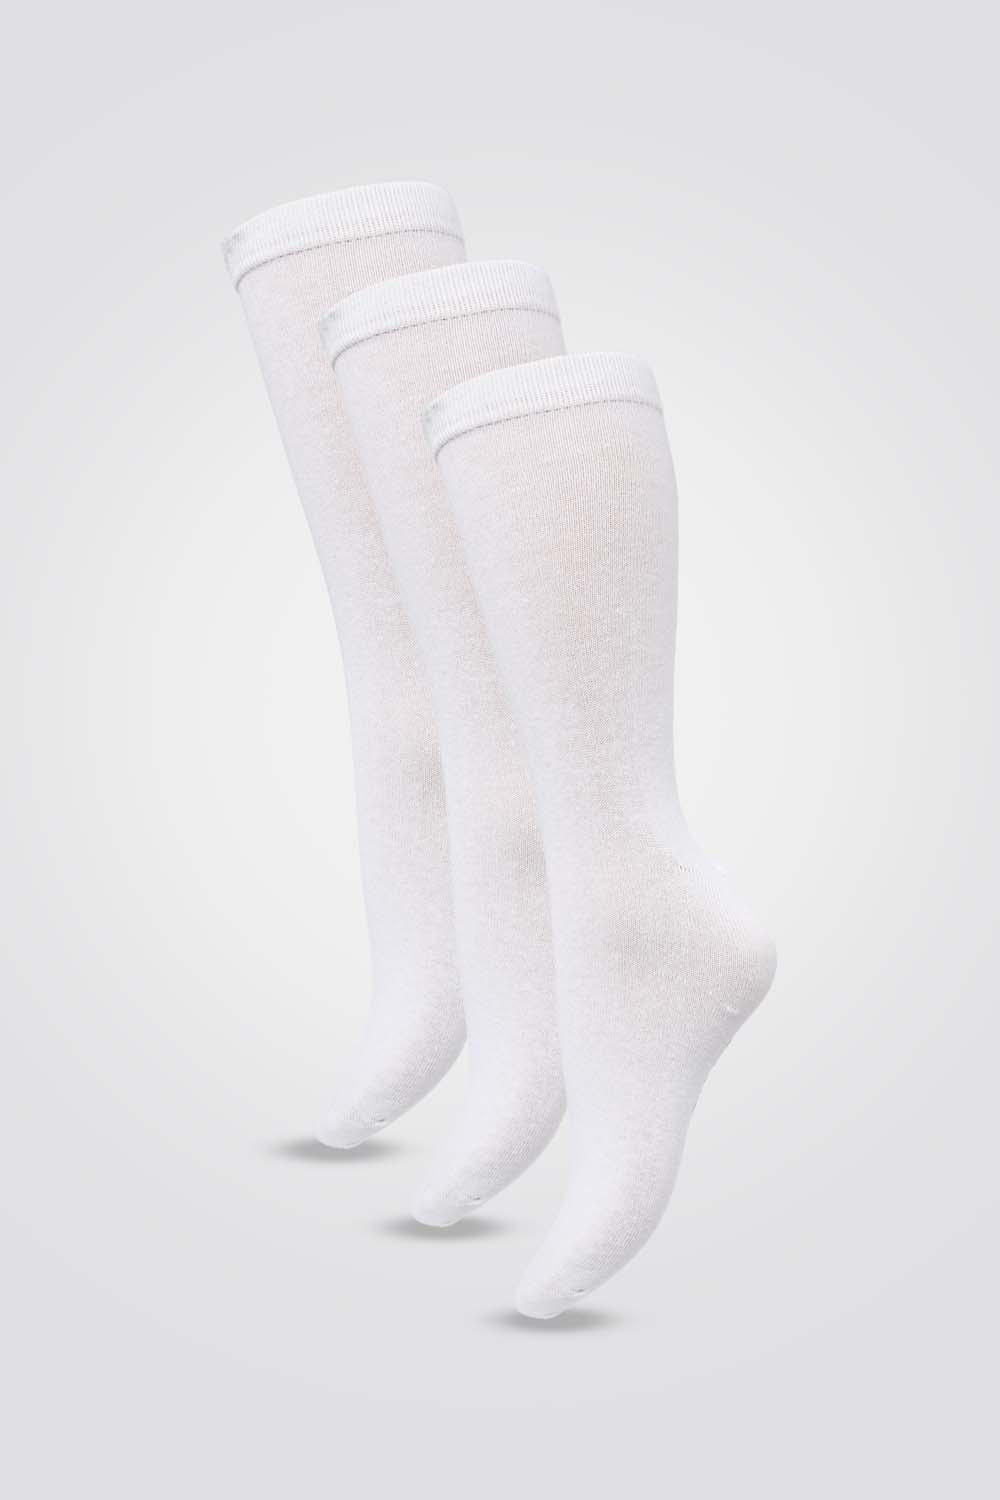 SRIGAMISH - 3 זוגות גרבי גברים בצבע לבן - MASHBIR//365